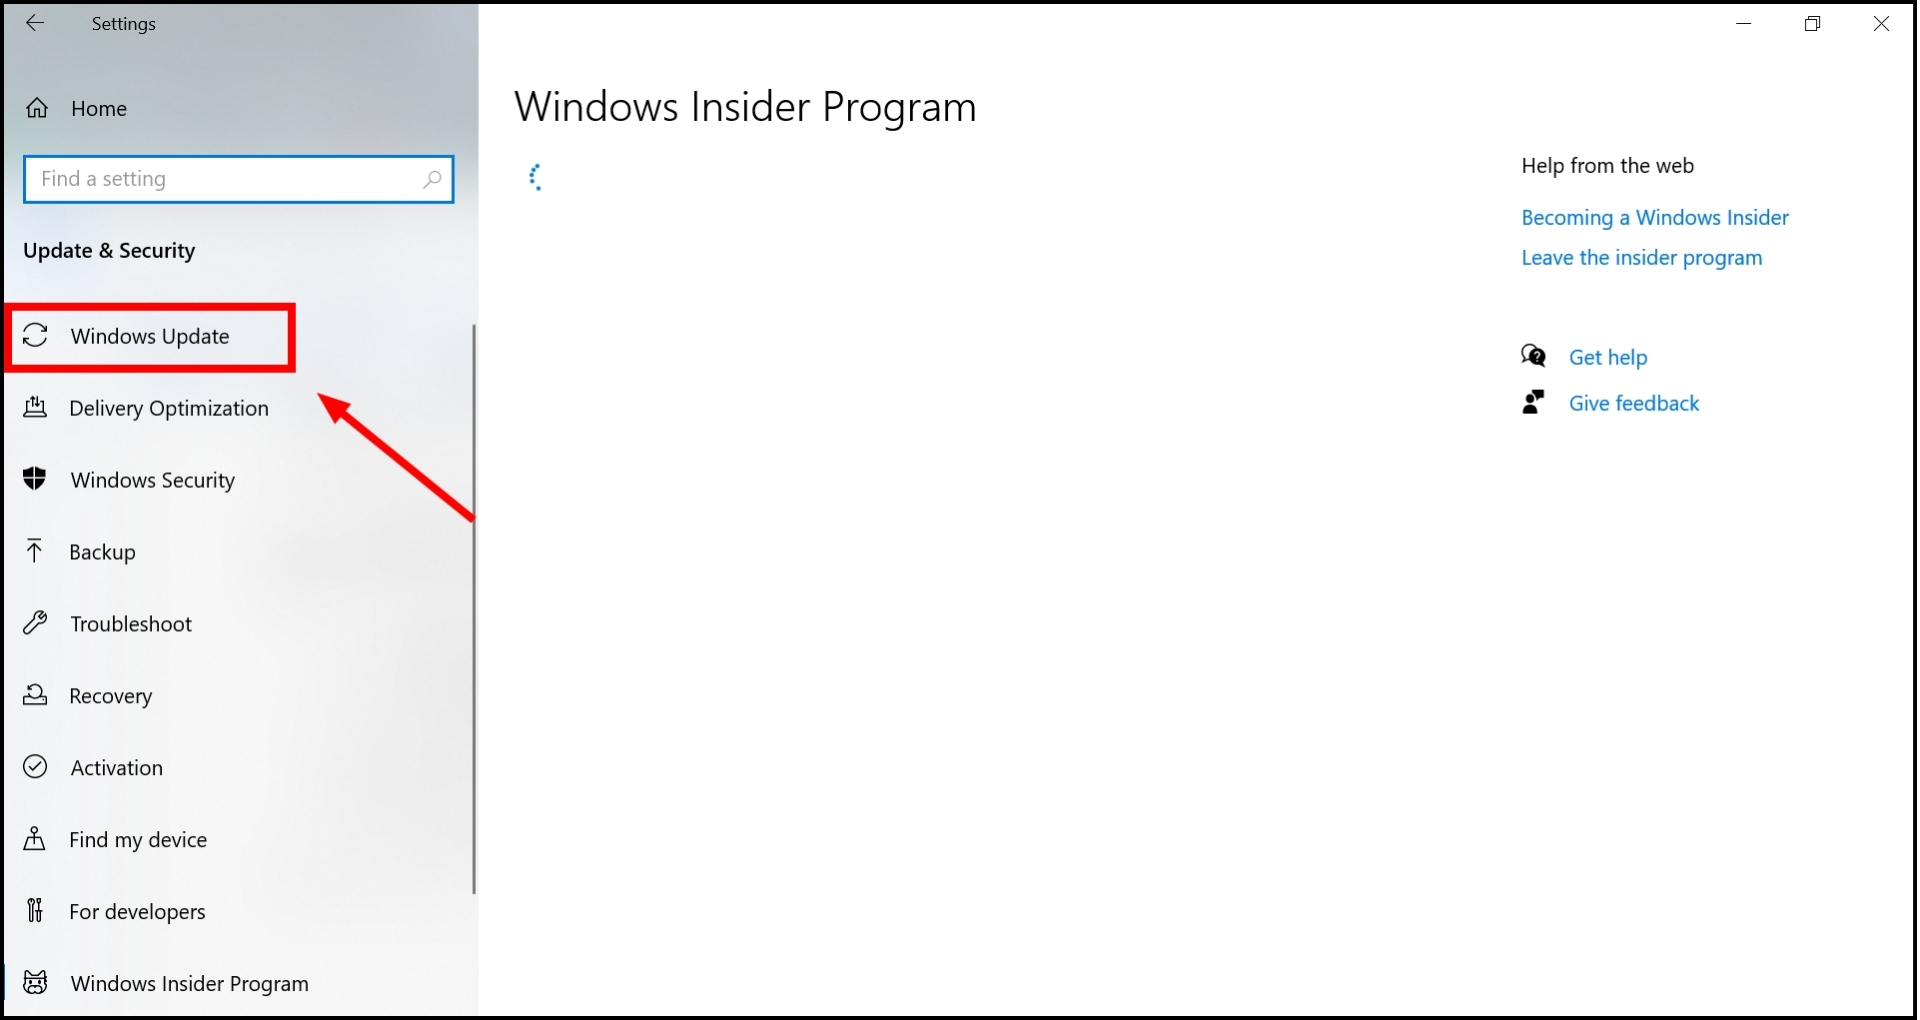 Select Windows Update